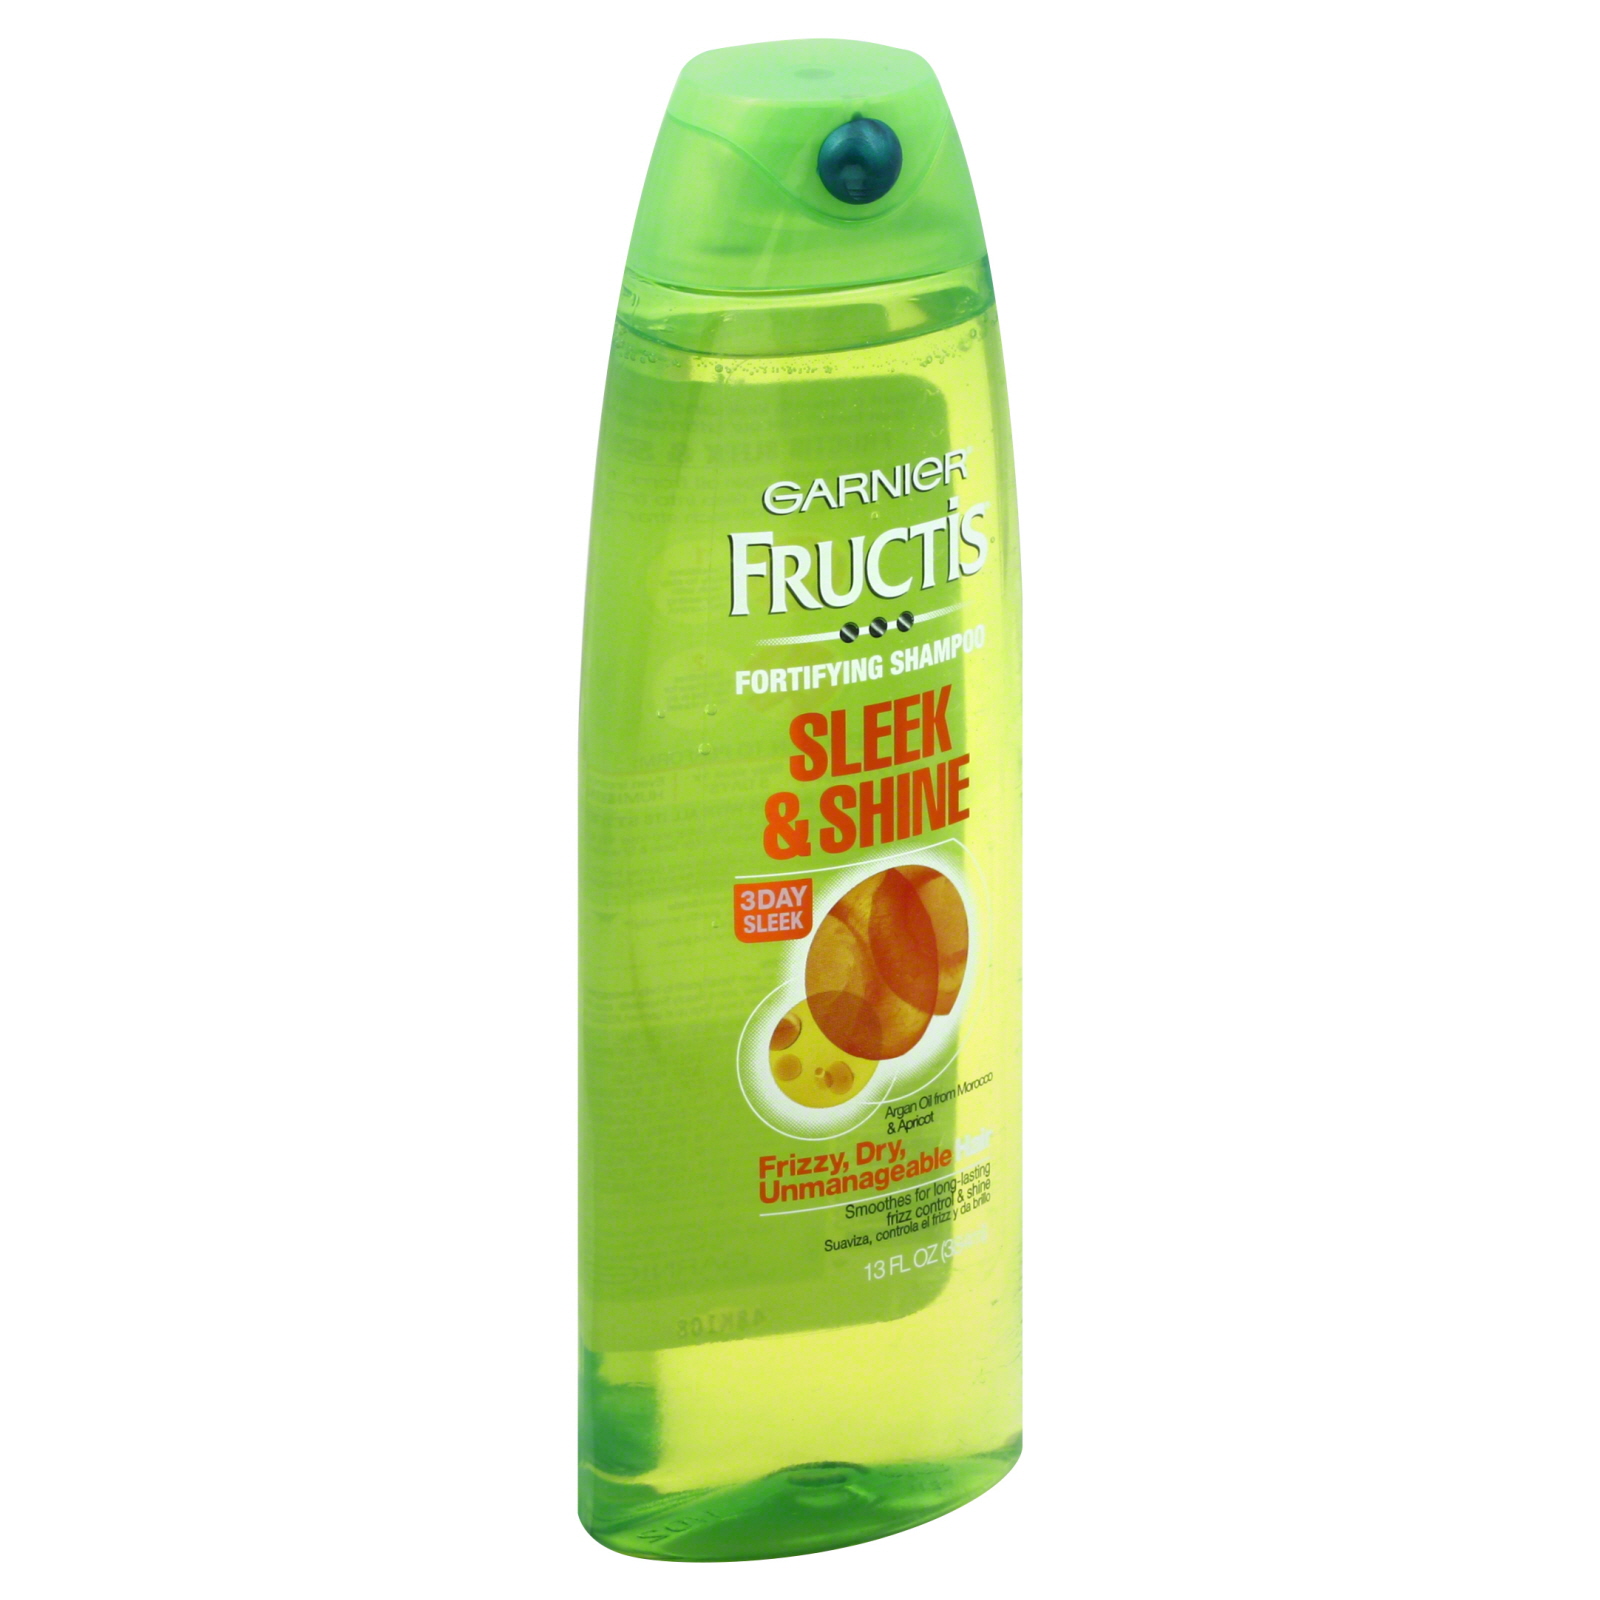 Garnier Fructis Sleek & Shine Fortifying Shampoo, 13 fl oz (384 ml)